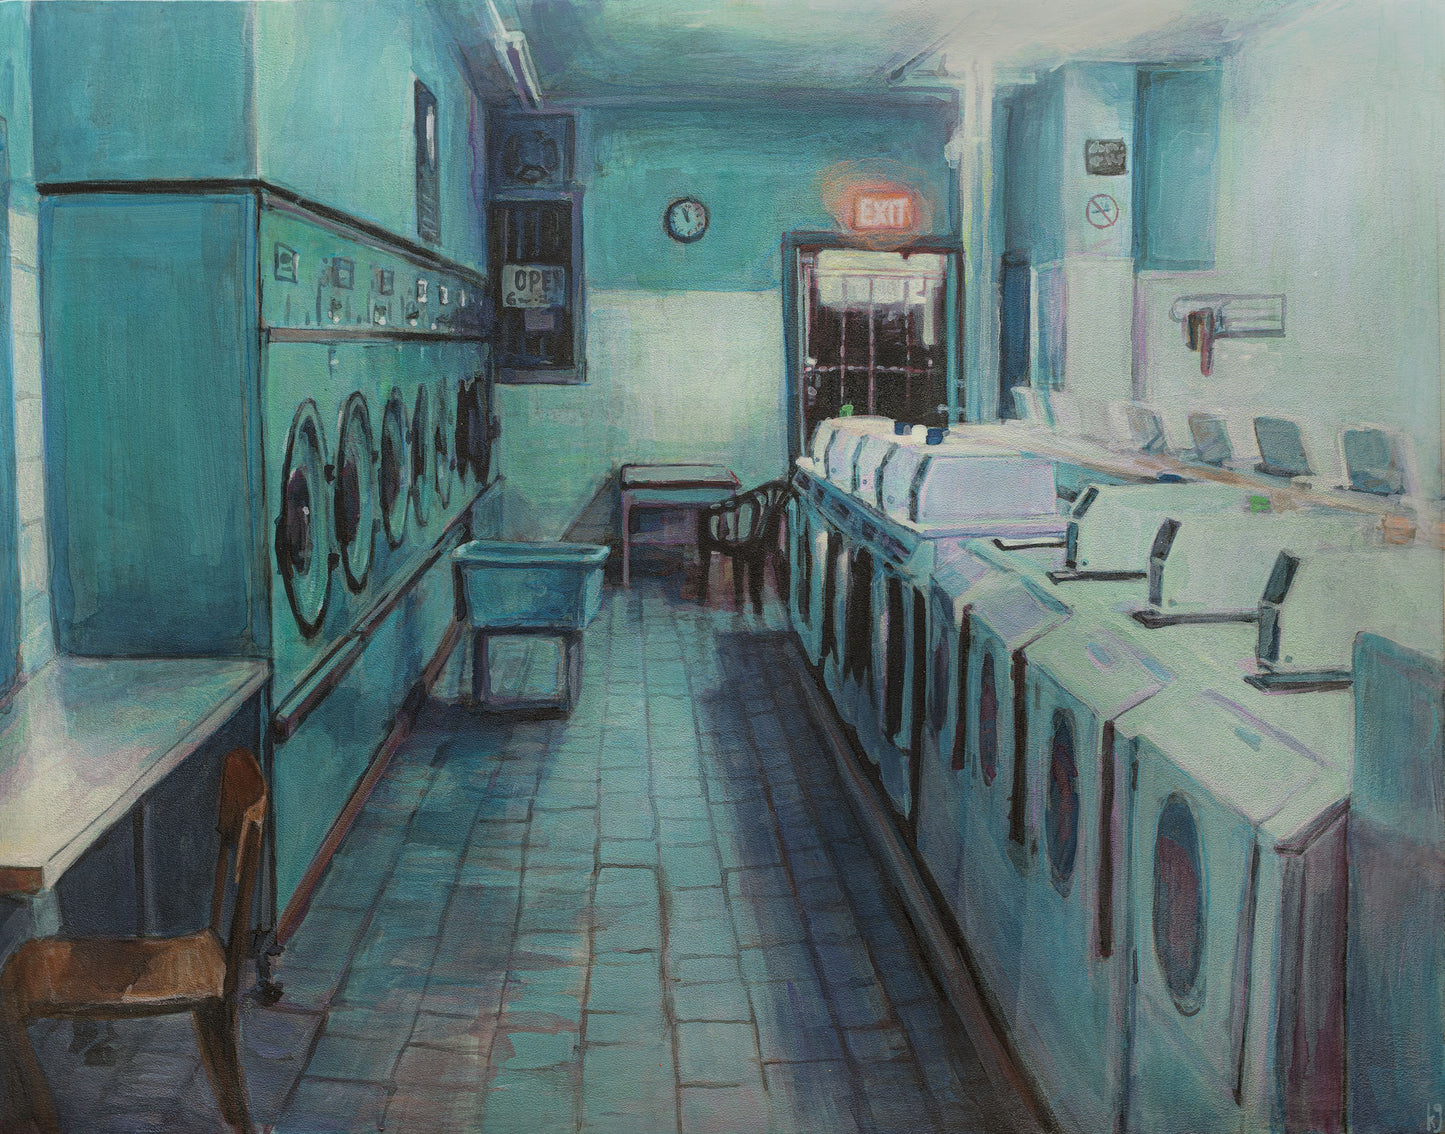 Kelly Grace, Laundromat